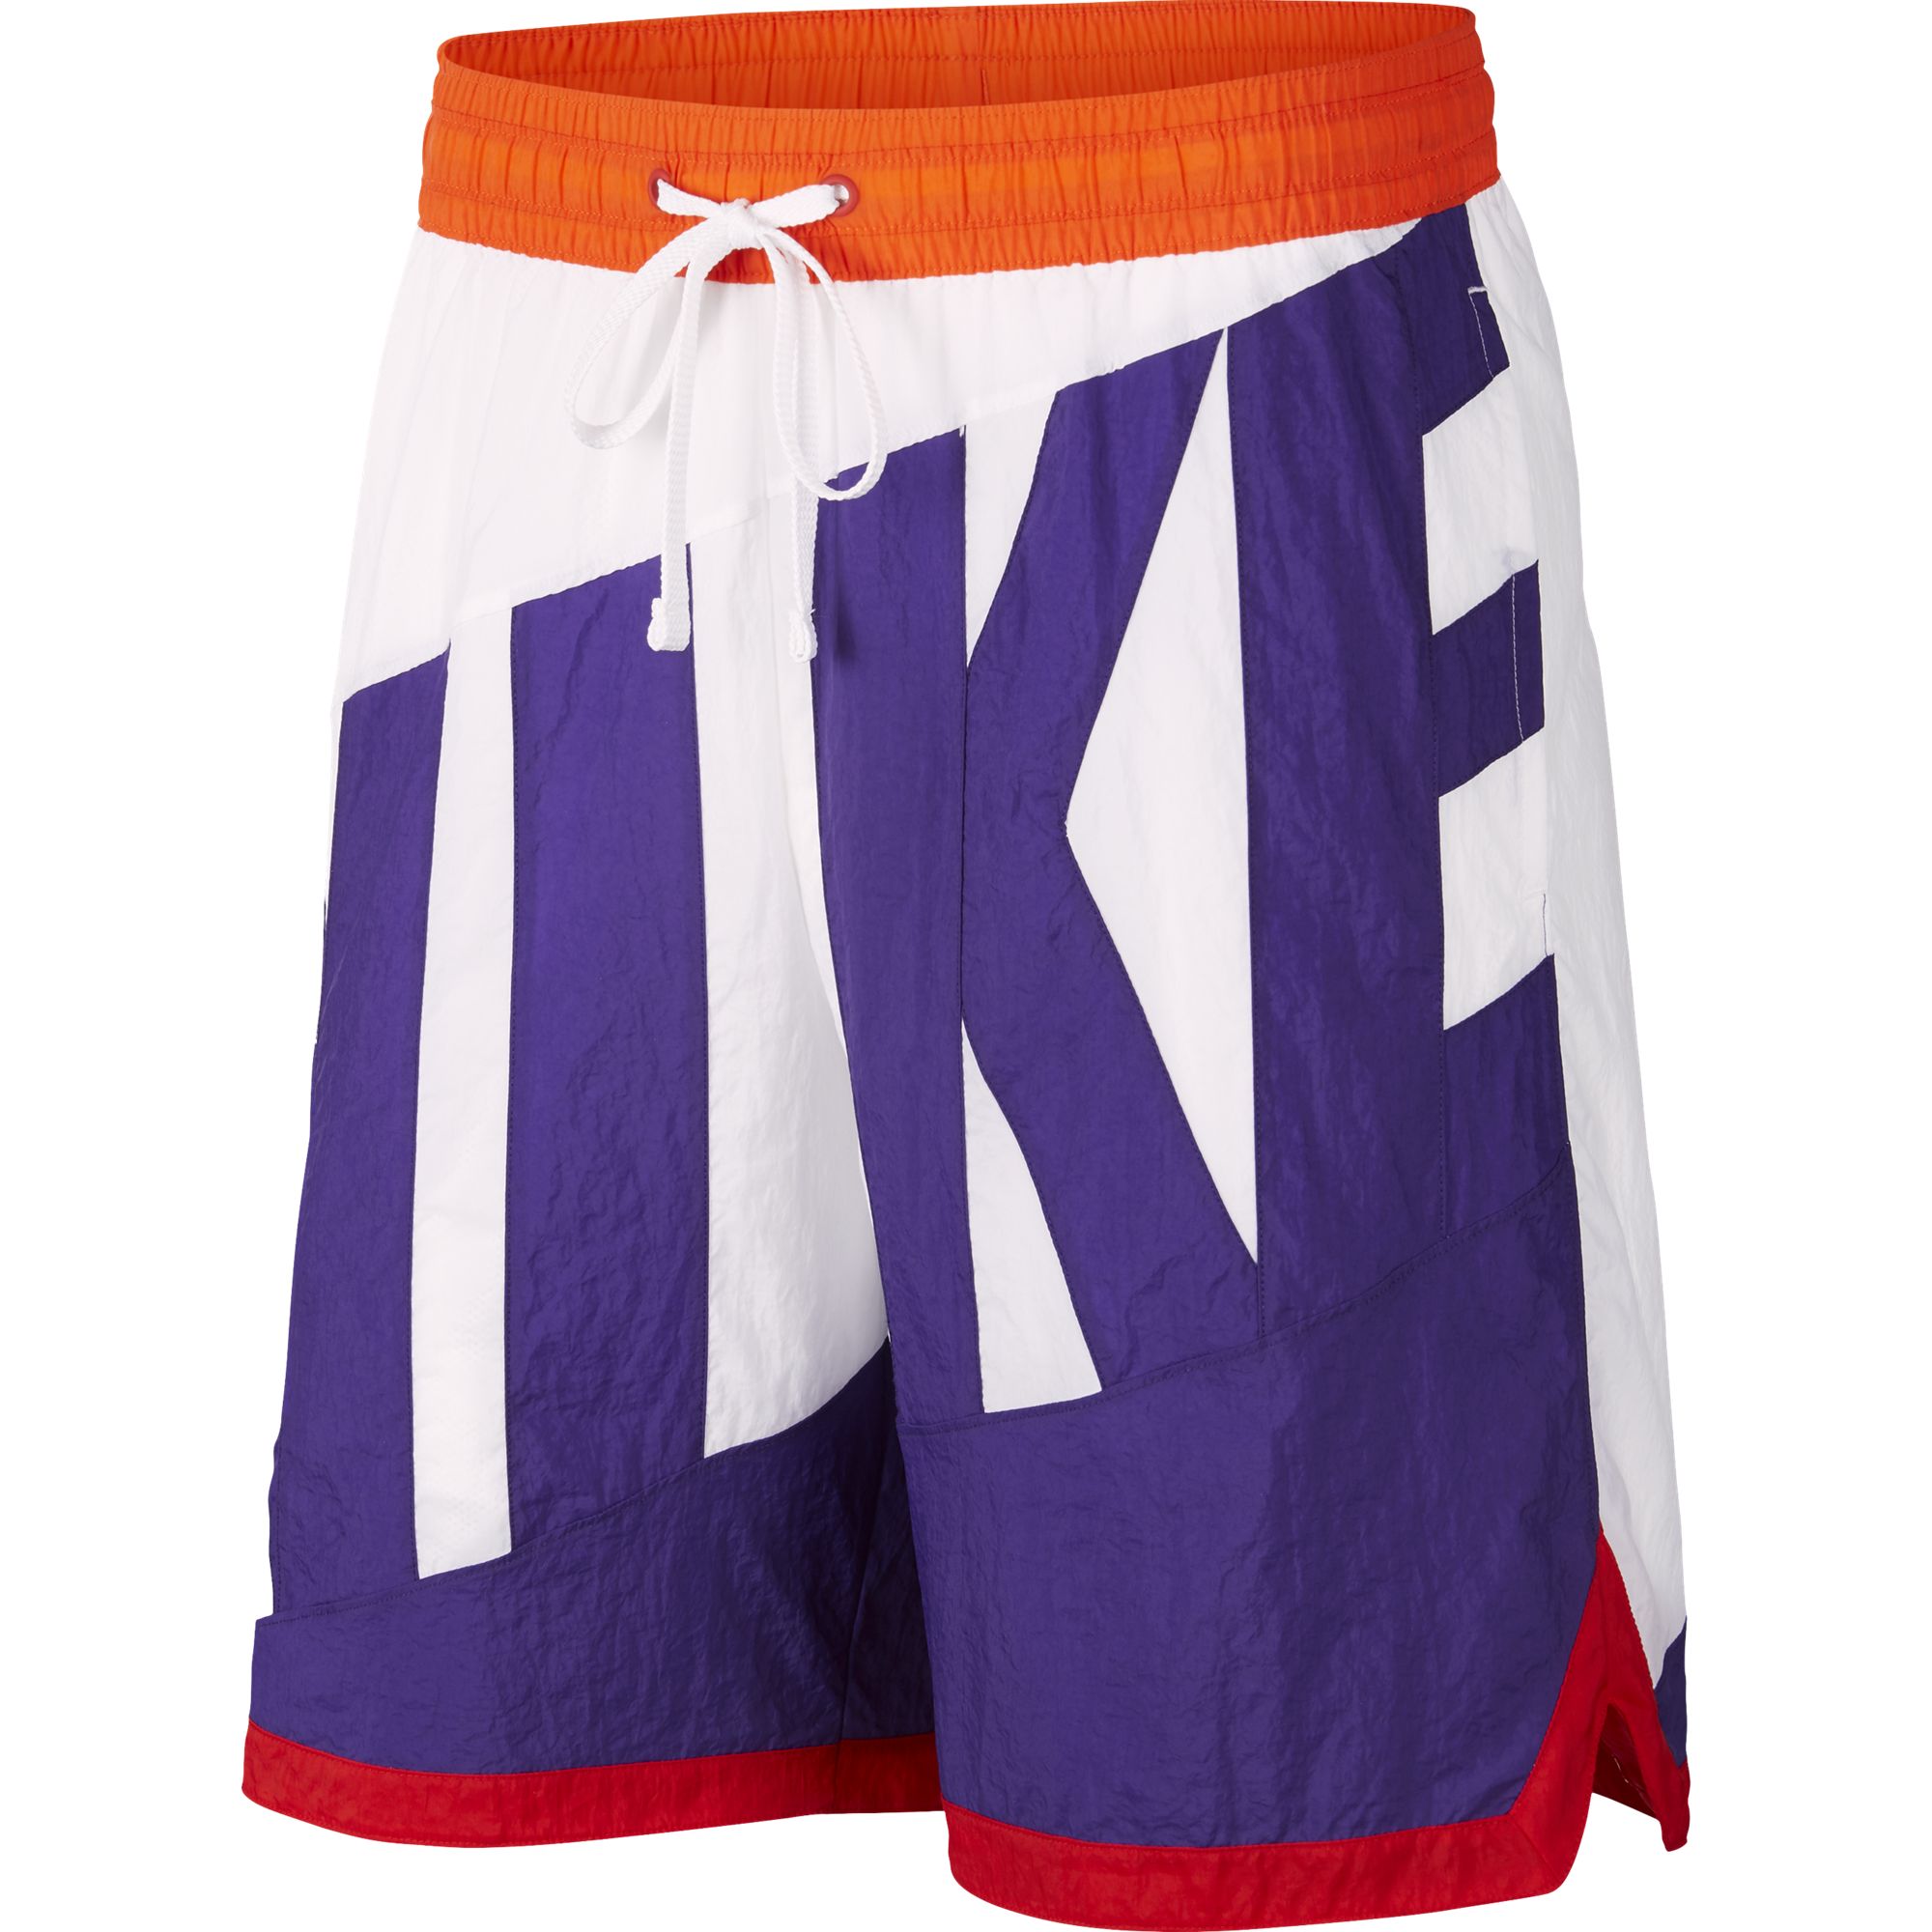 Buy > throwback nike shorts > in stock